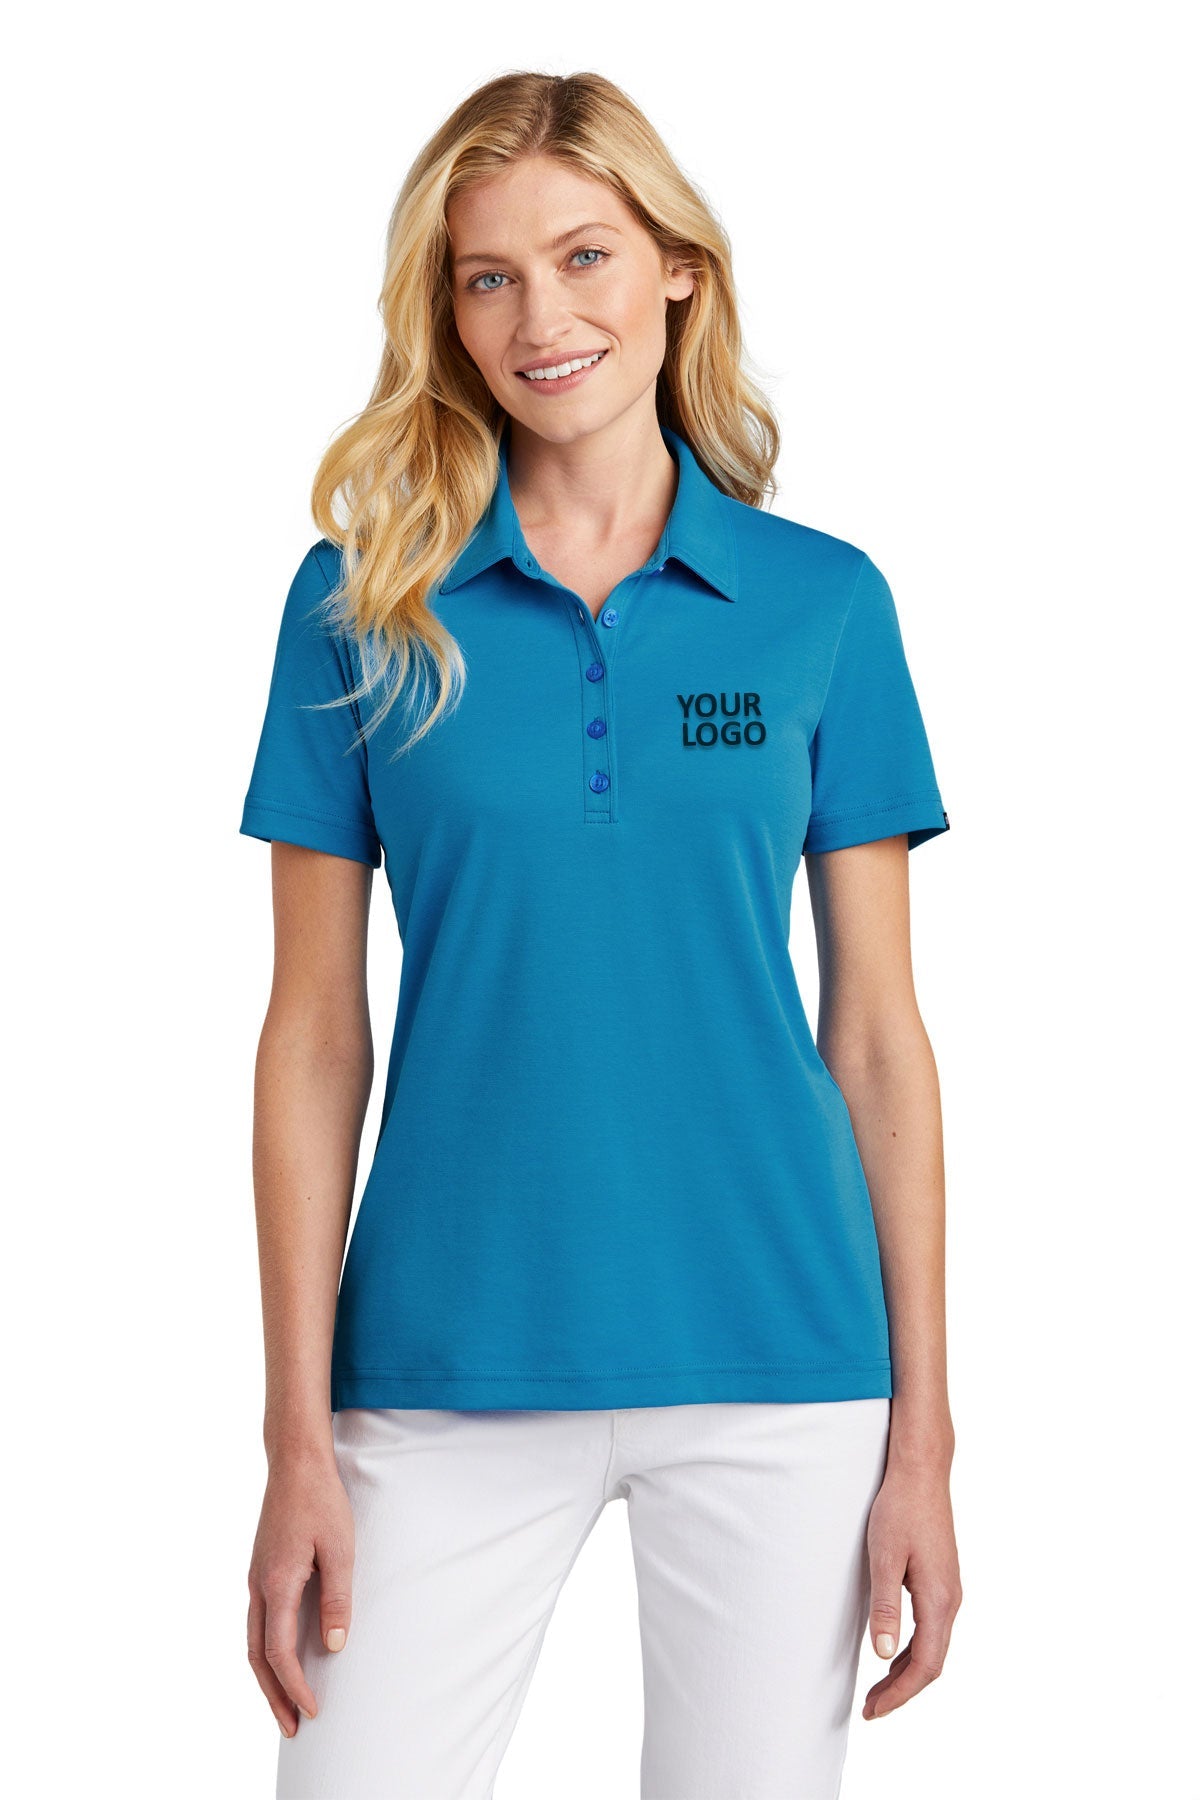 TravisMathew Classic Blue Polos polo shirt with logo embroidered